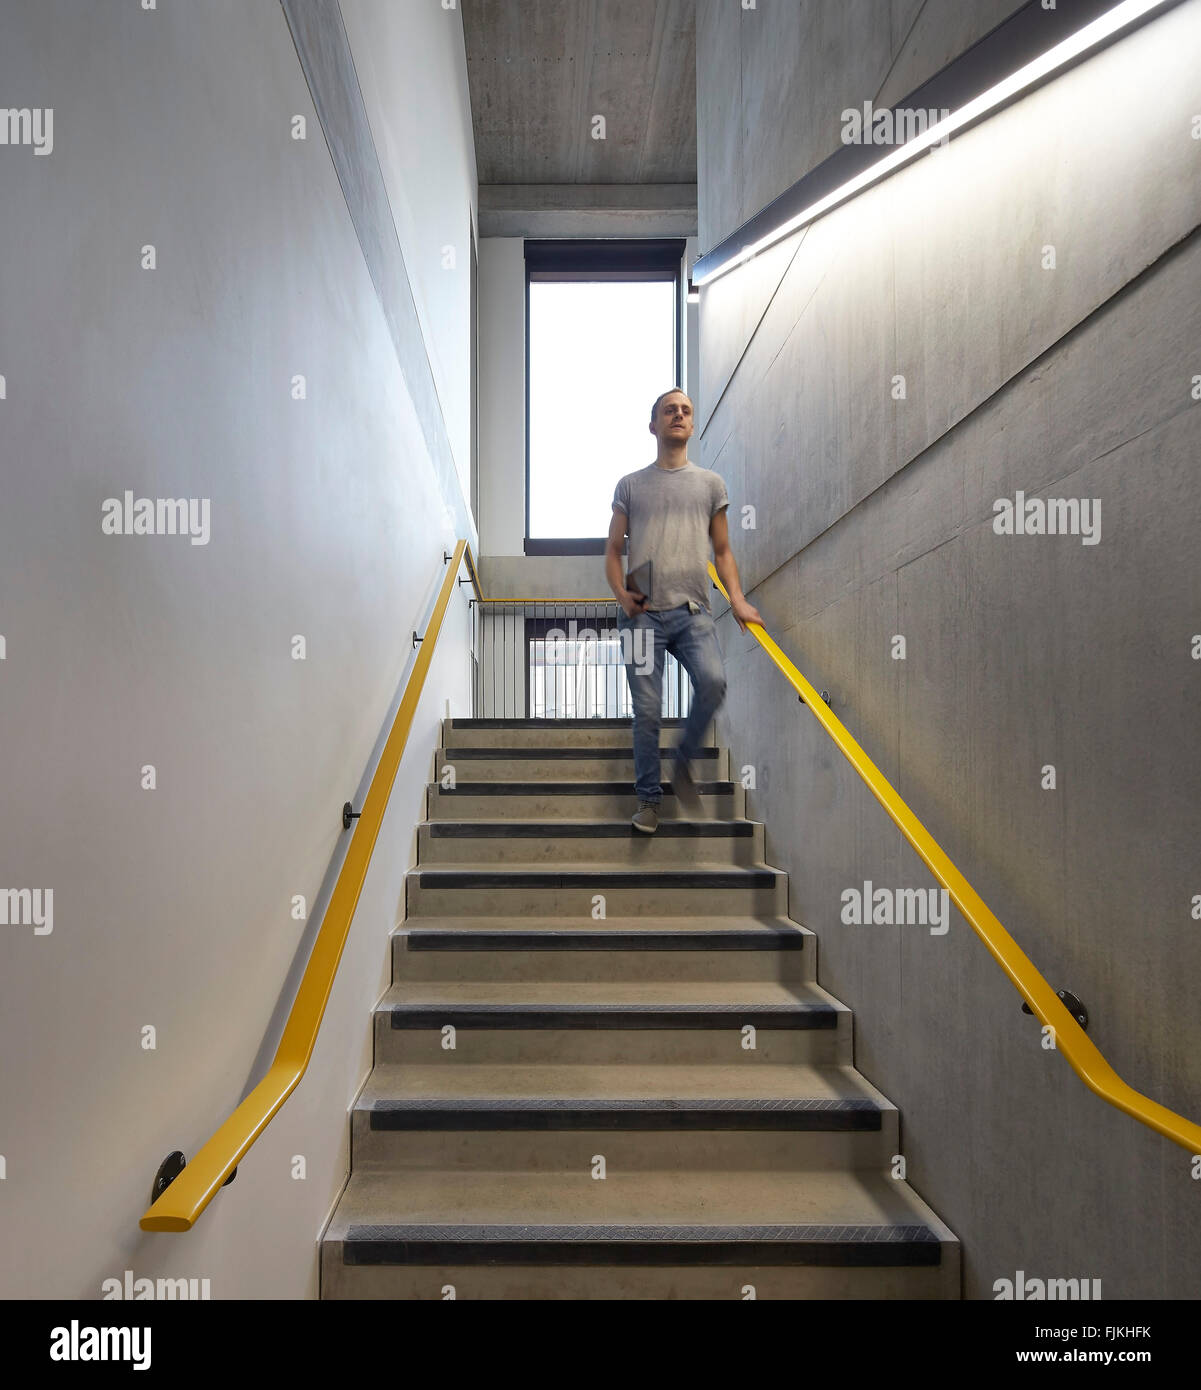 Stairwell with concrete walls. MMU Student Union, Manchester, United Kingdom. Architect: Feilden Clegg Bradley Studios LLP, 2015 Stock Photo